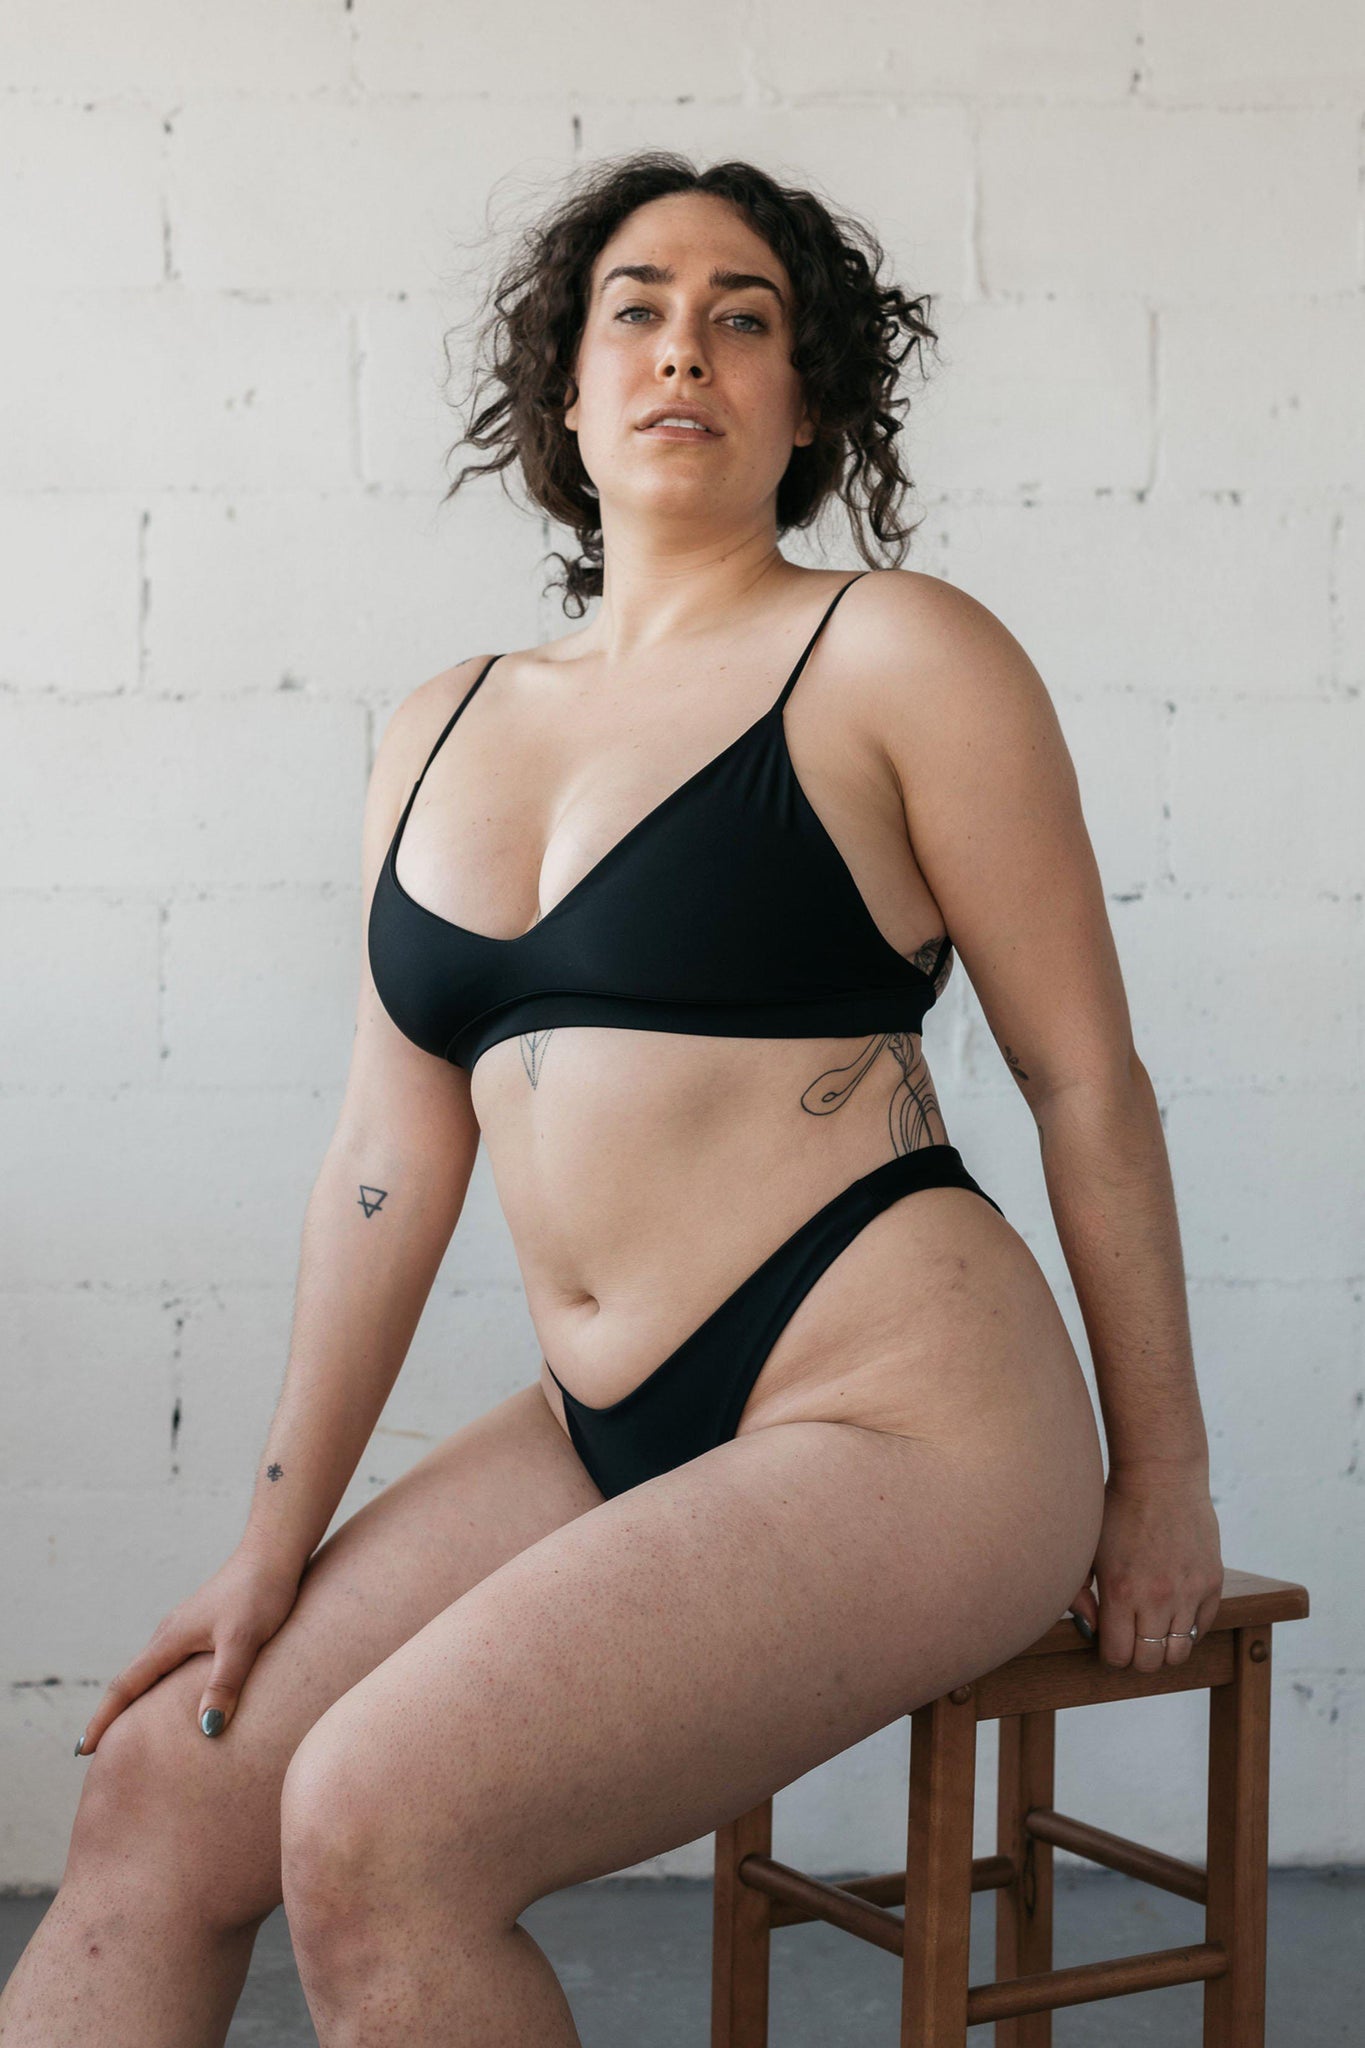 Woman sitting on a stool wearing a black bikini with high cut bottoms